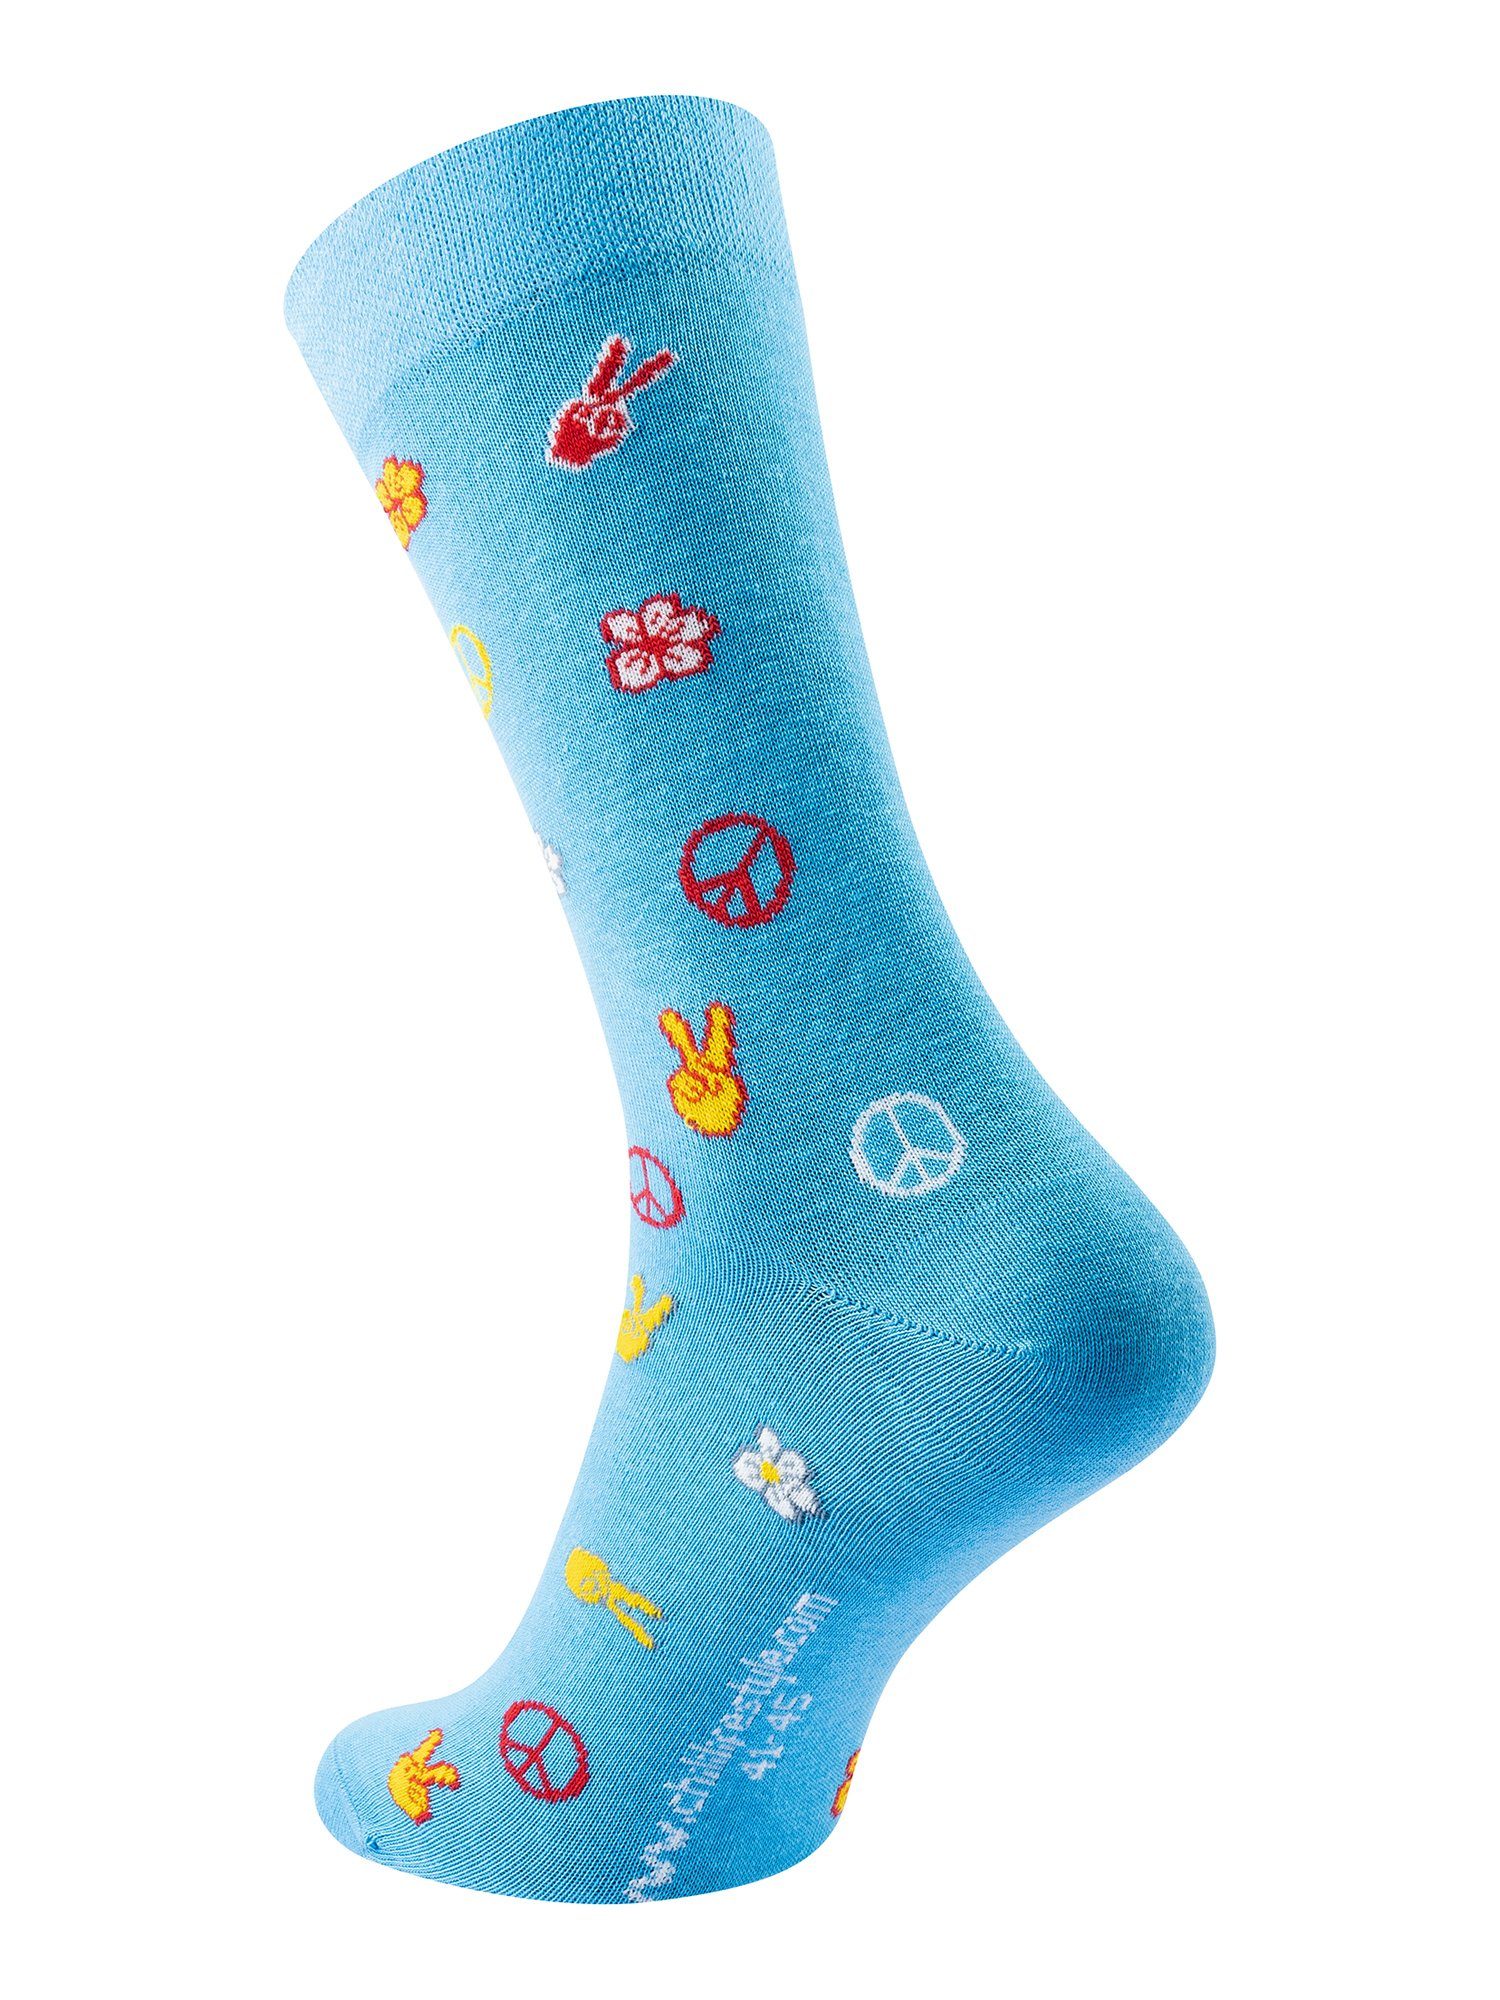 Freizeitsocken Leisure Chili Lifestyle Peace Socks Banderole